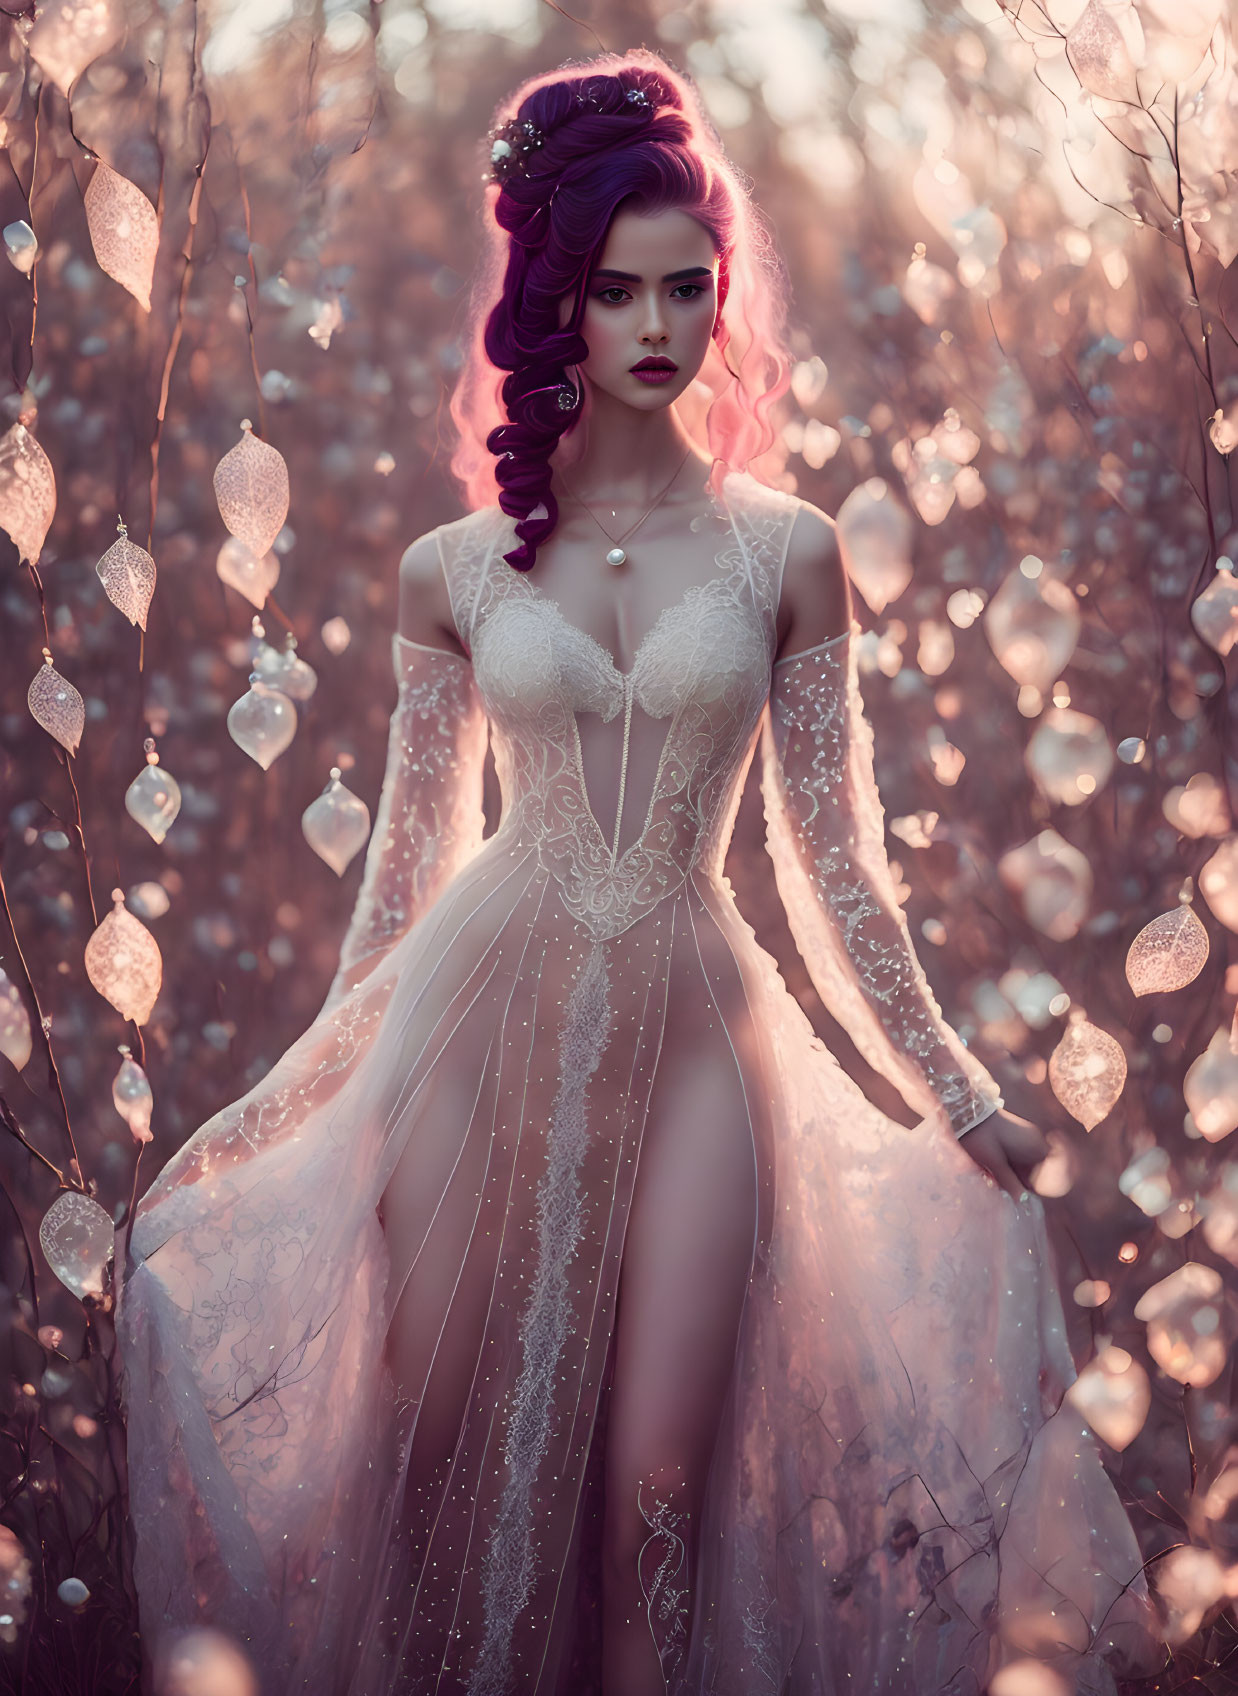 Translucent lace wedding dress